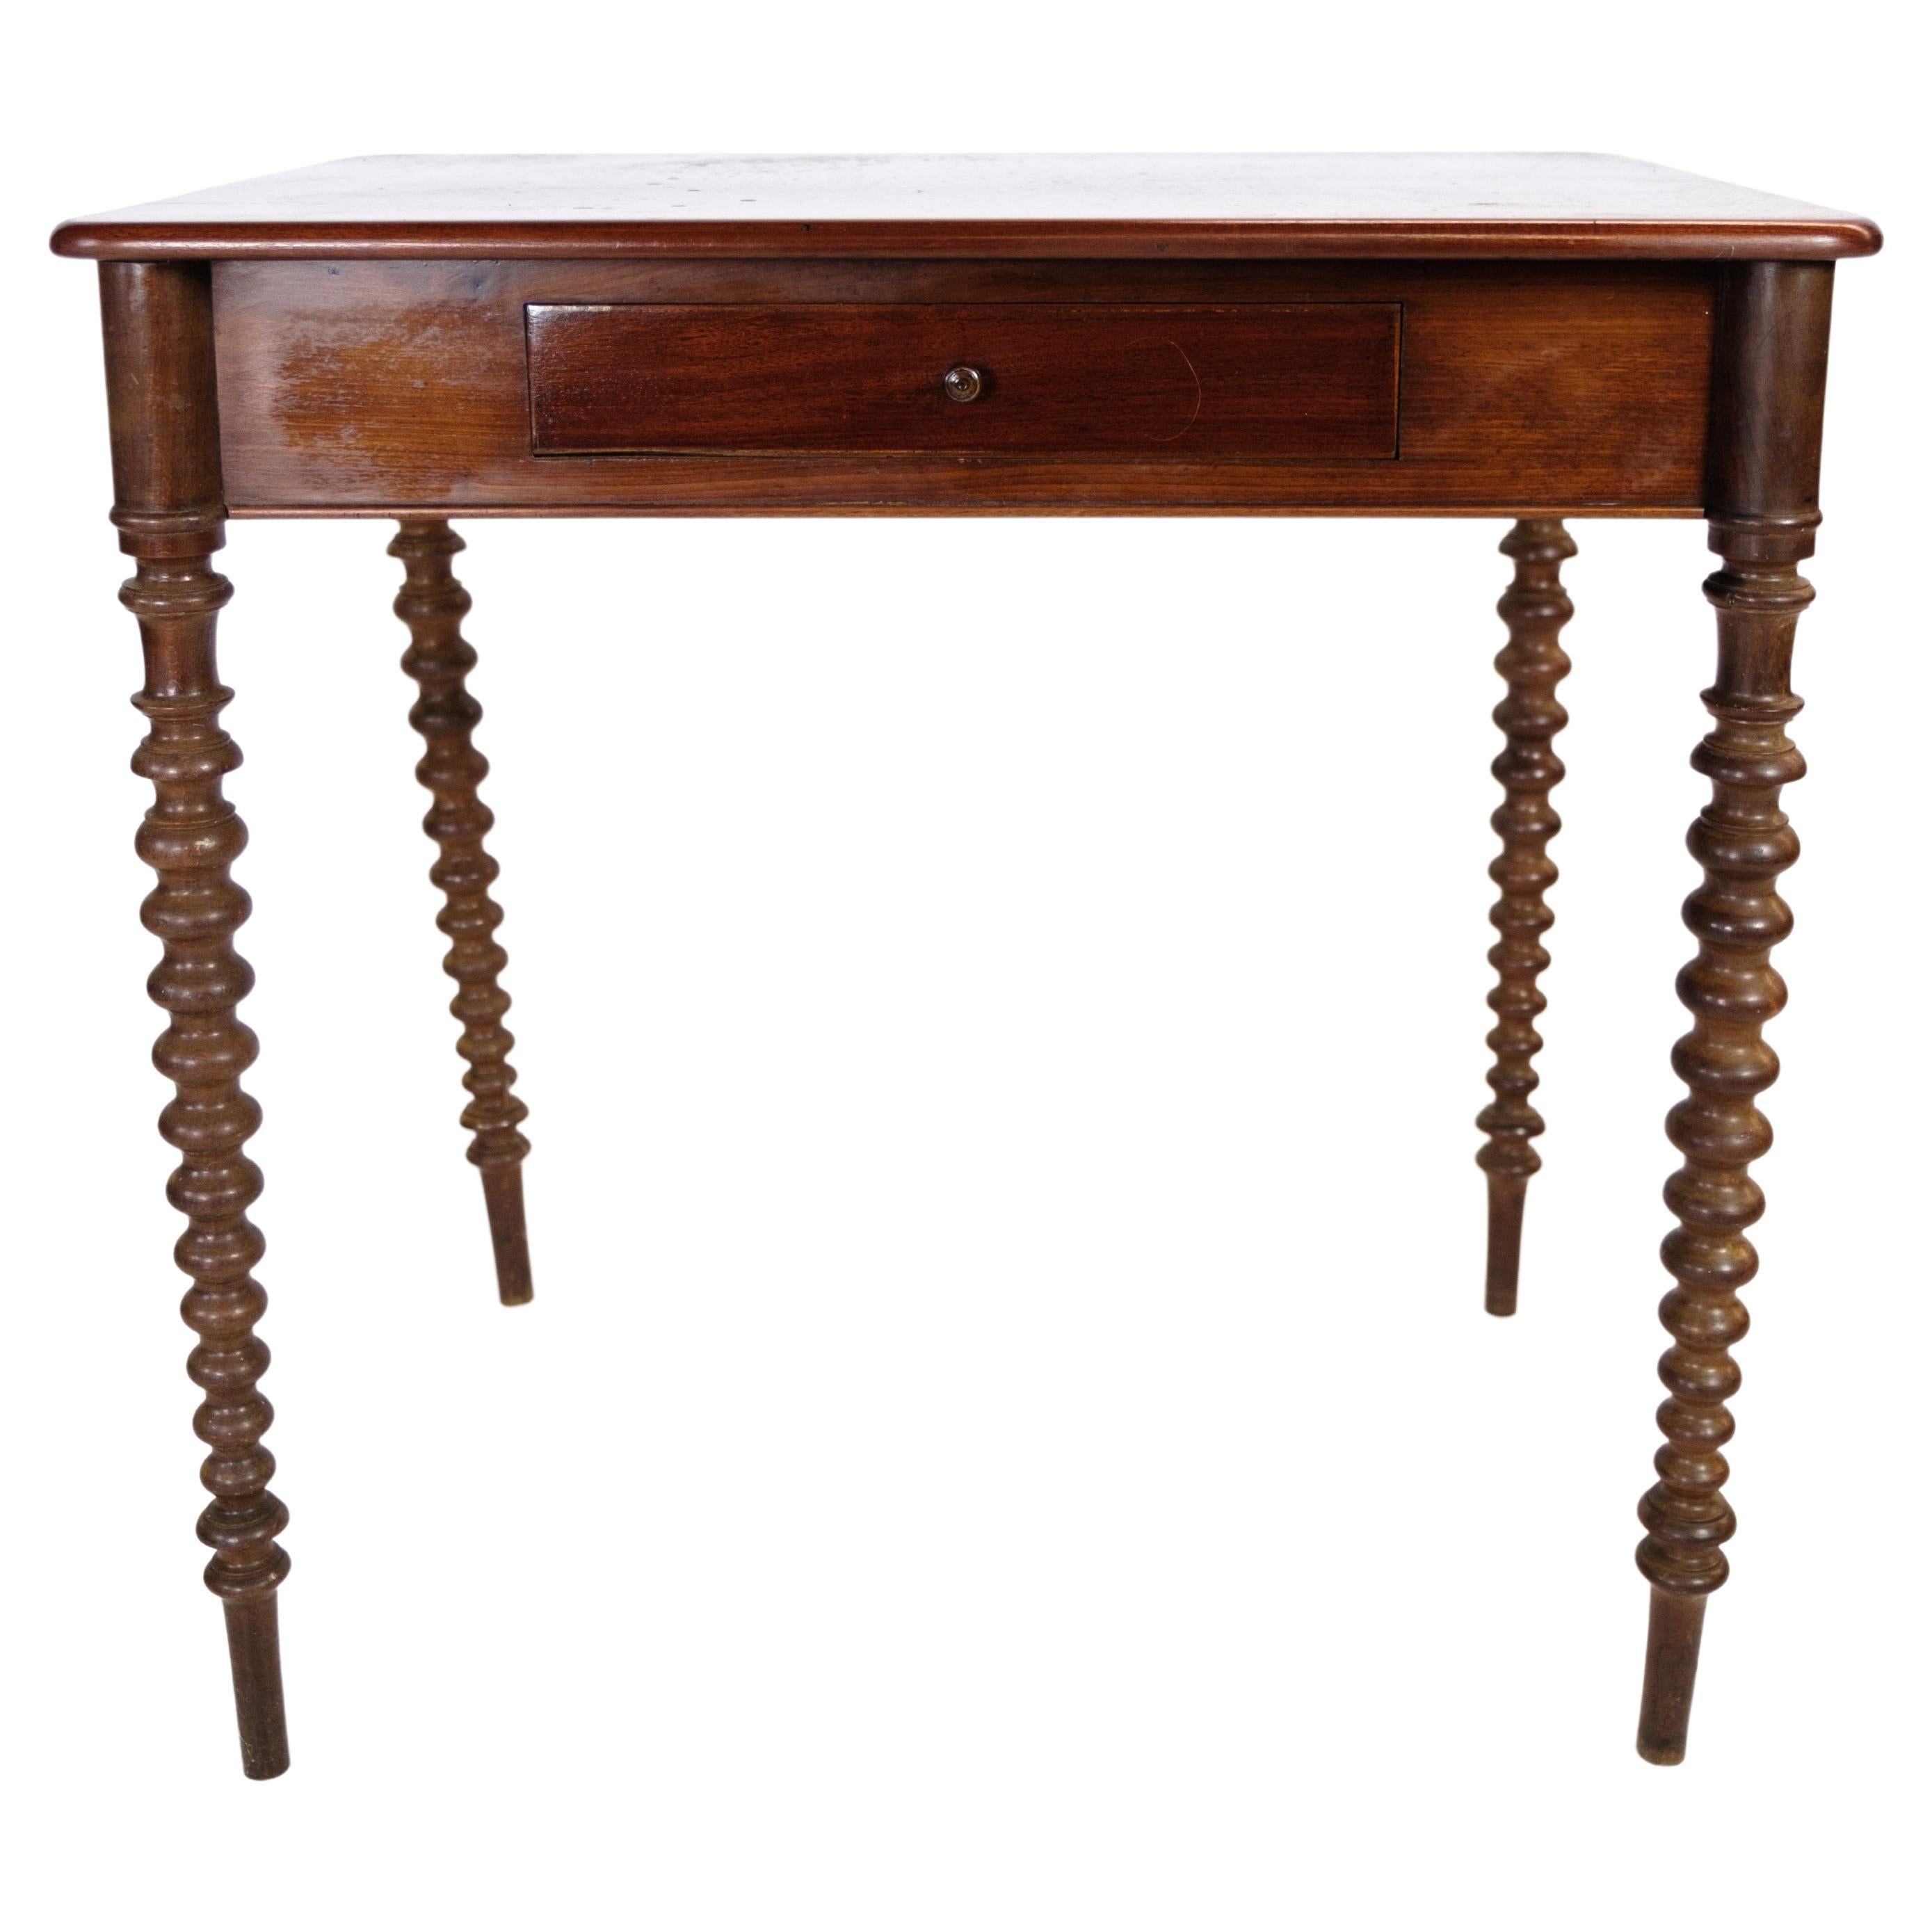 Side table, Mahogany, Drawer, 1880